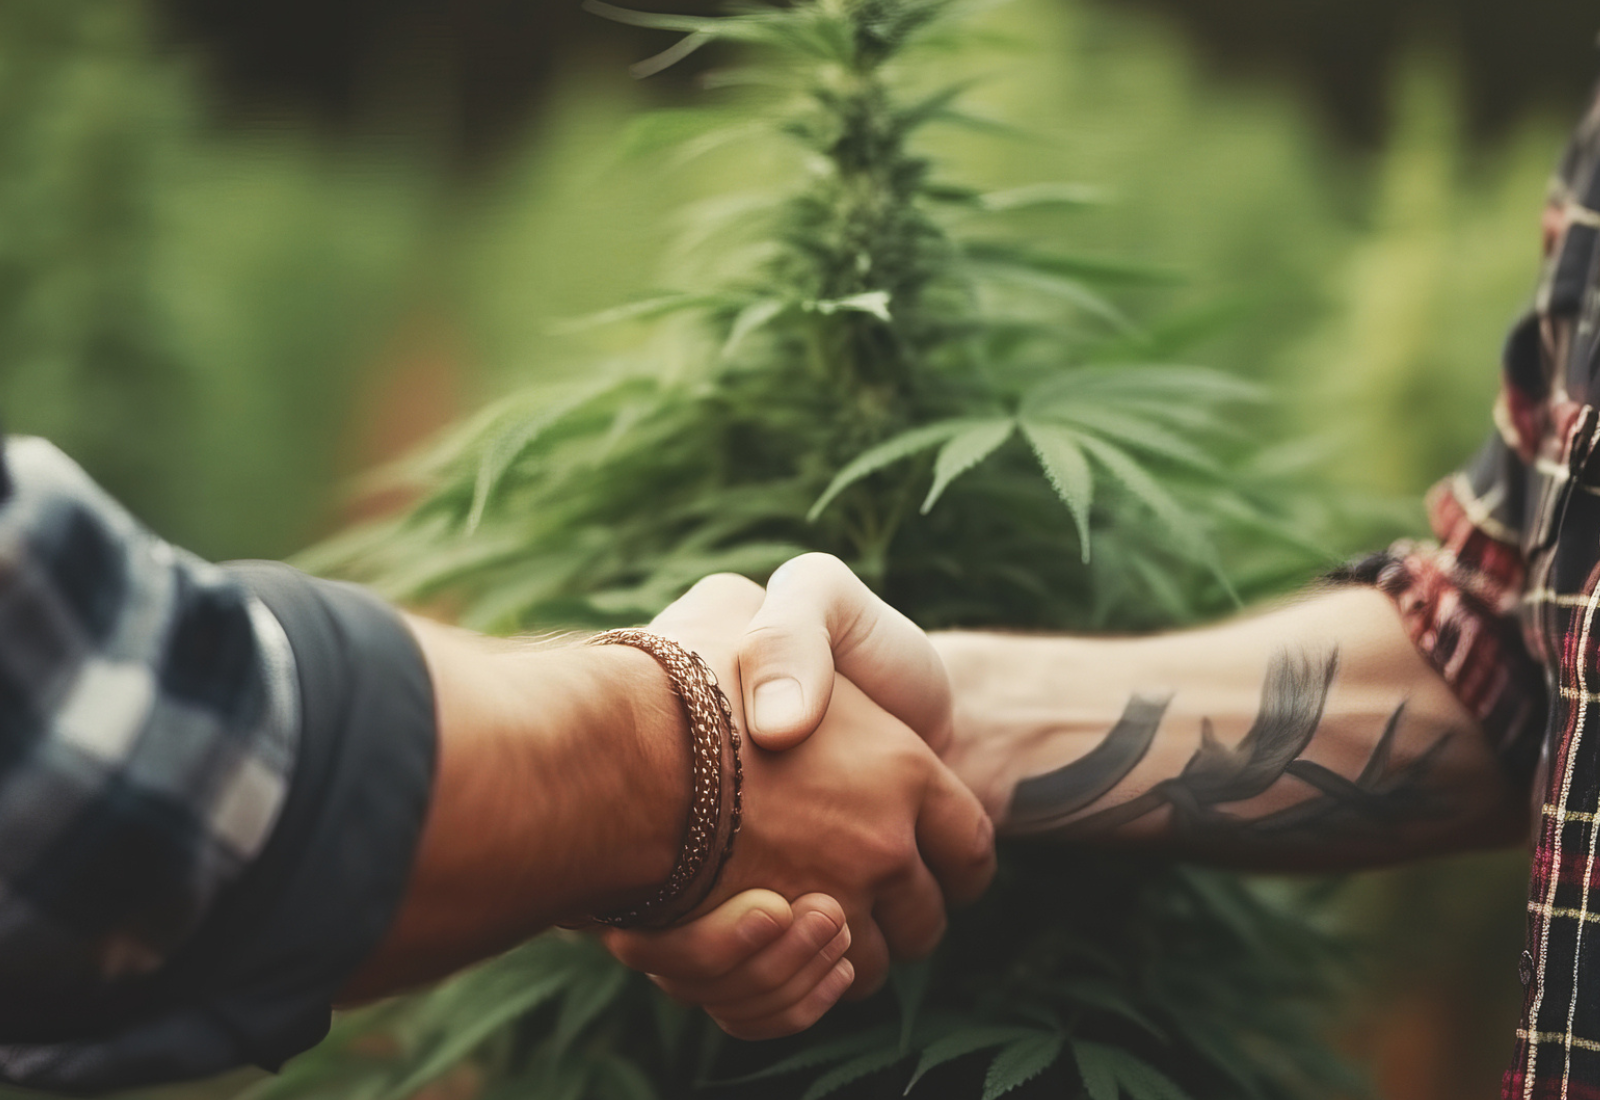 Saat-saat Sulit: Cannabis Joint Ventures Semoga Membantu